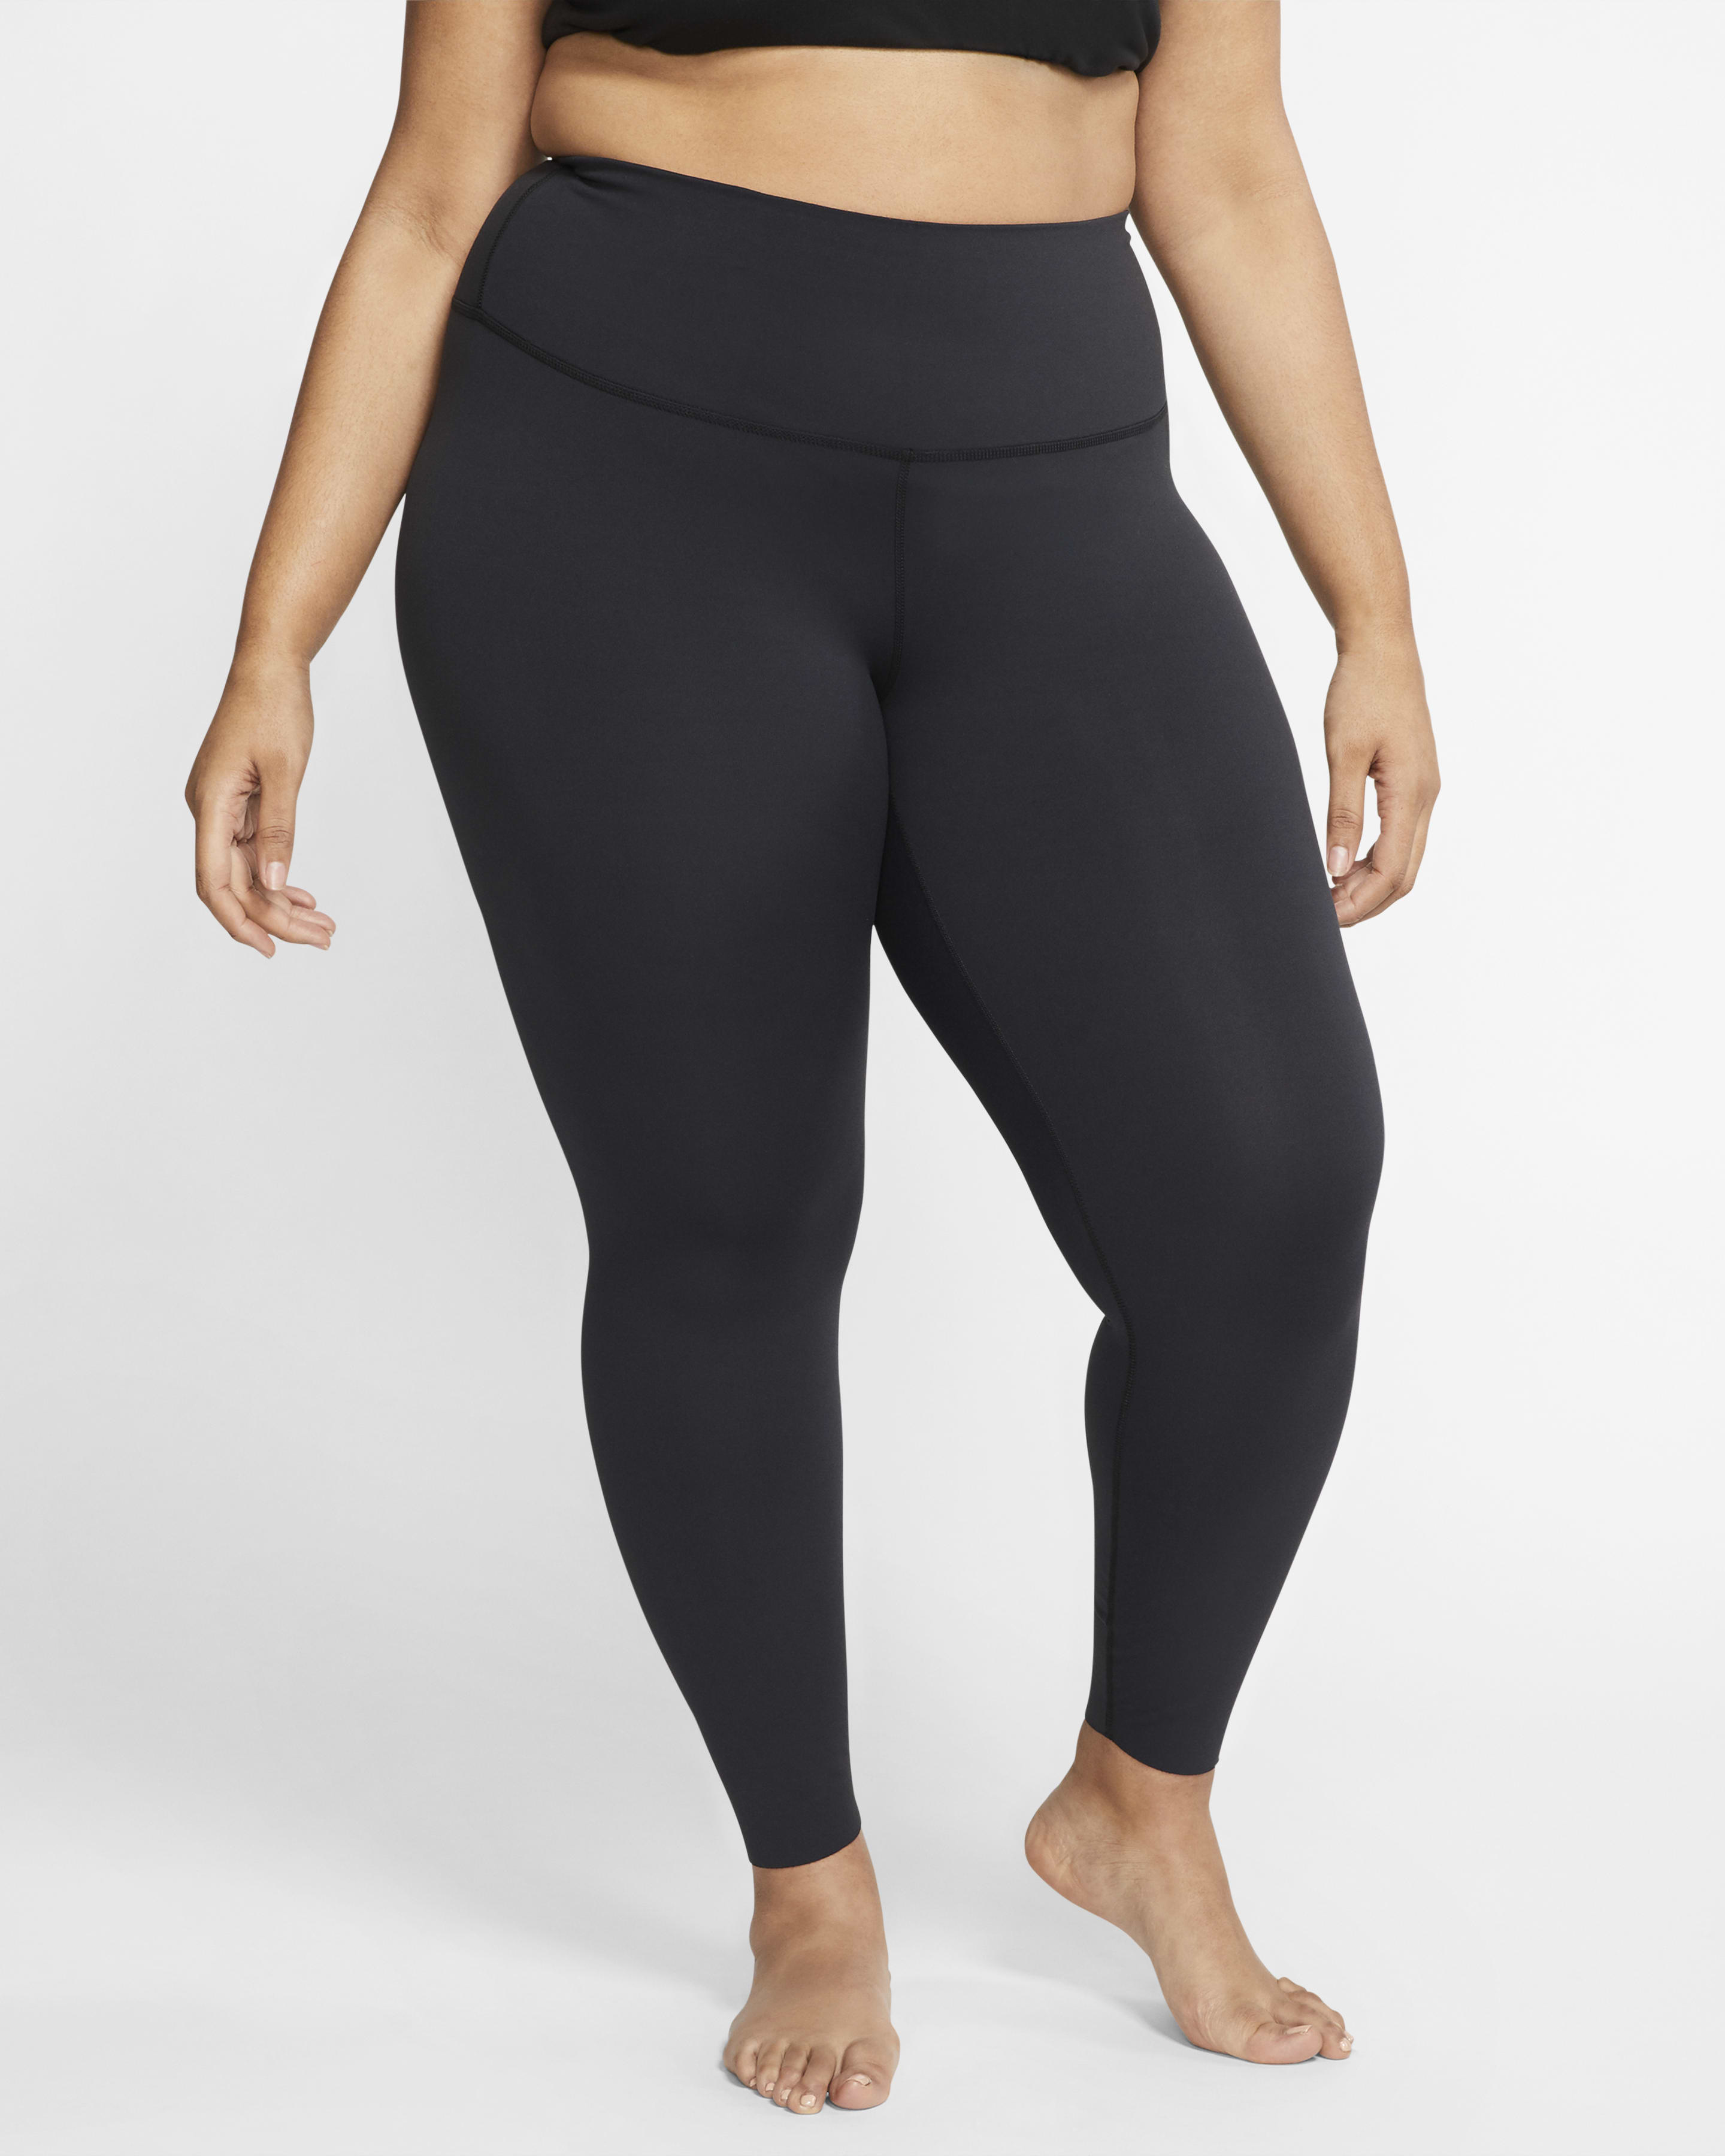 Plus Size Yoga Pants for Women 2X Pockets Print High Waist Yoga